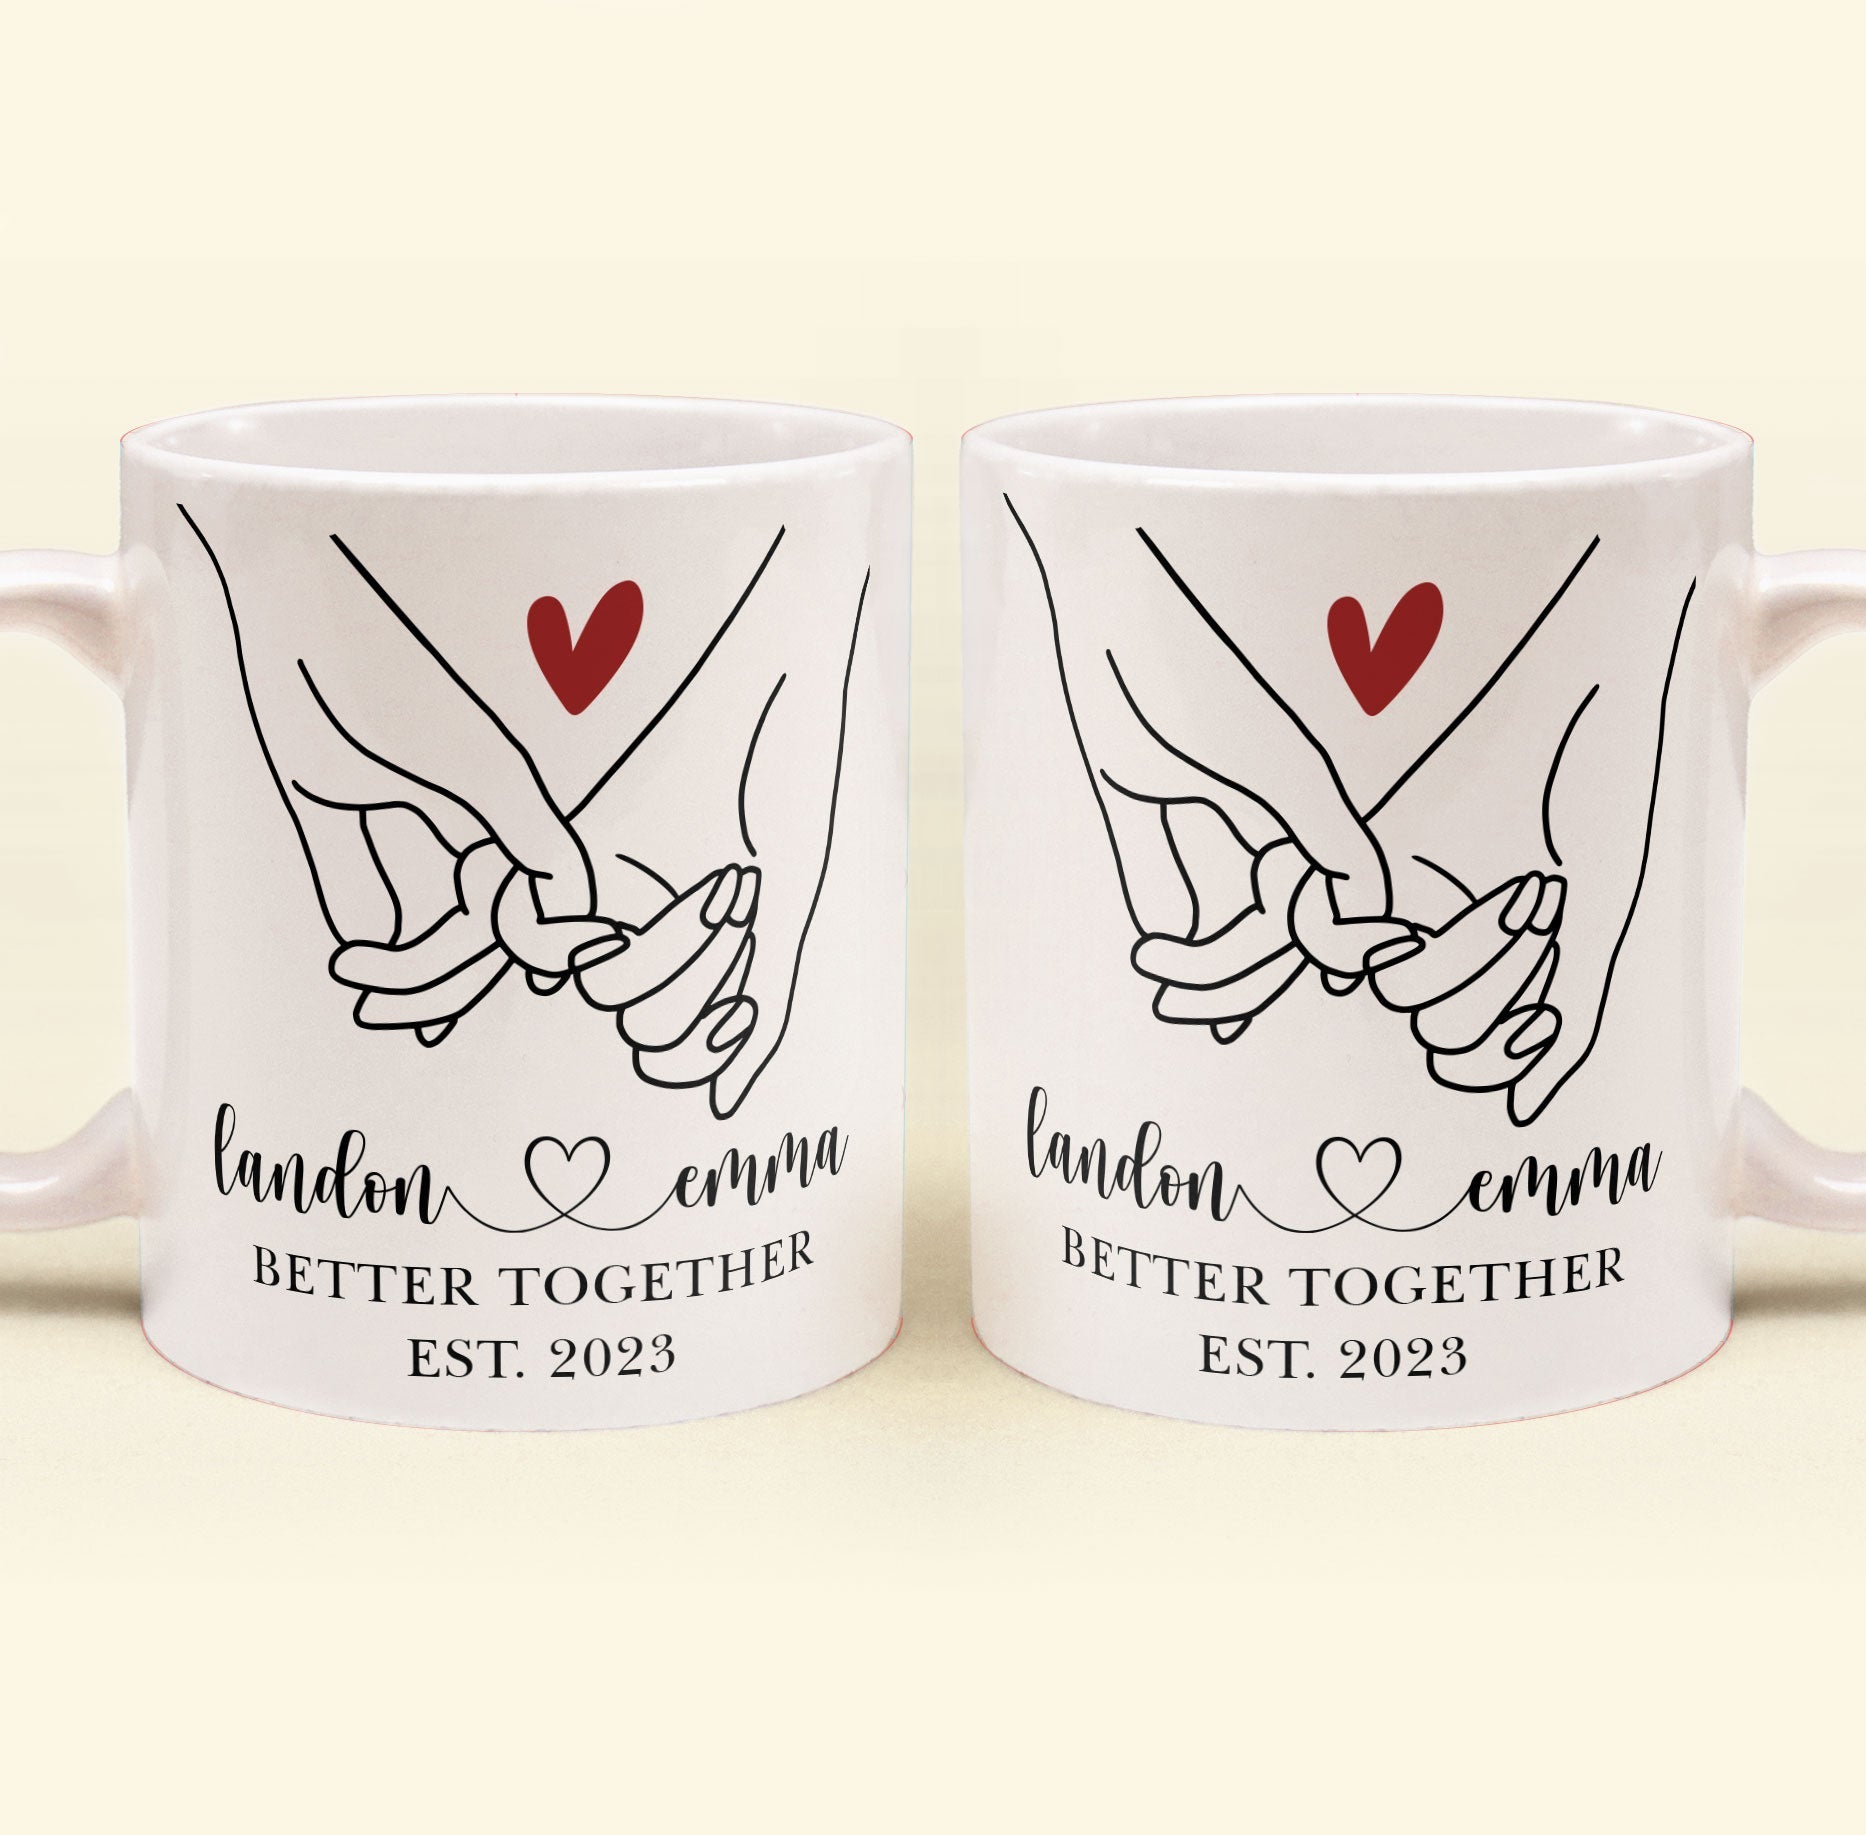 Couples Matching Mugs, I Don't Do Matching Mugs, but I Do, Romantic Mugs,  Gift Mugs, Couples Gift, Funny Couples Mugs, Valentine's Day Mugs 